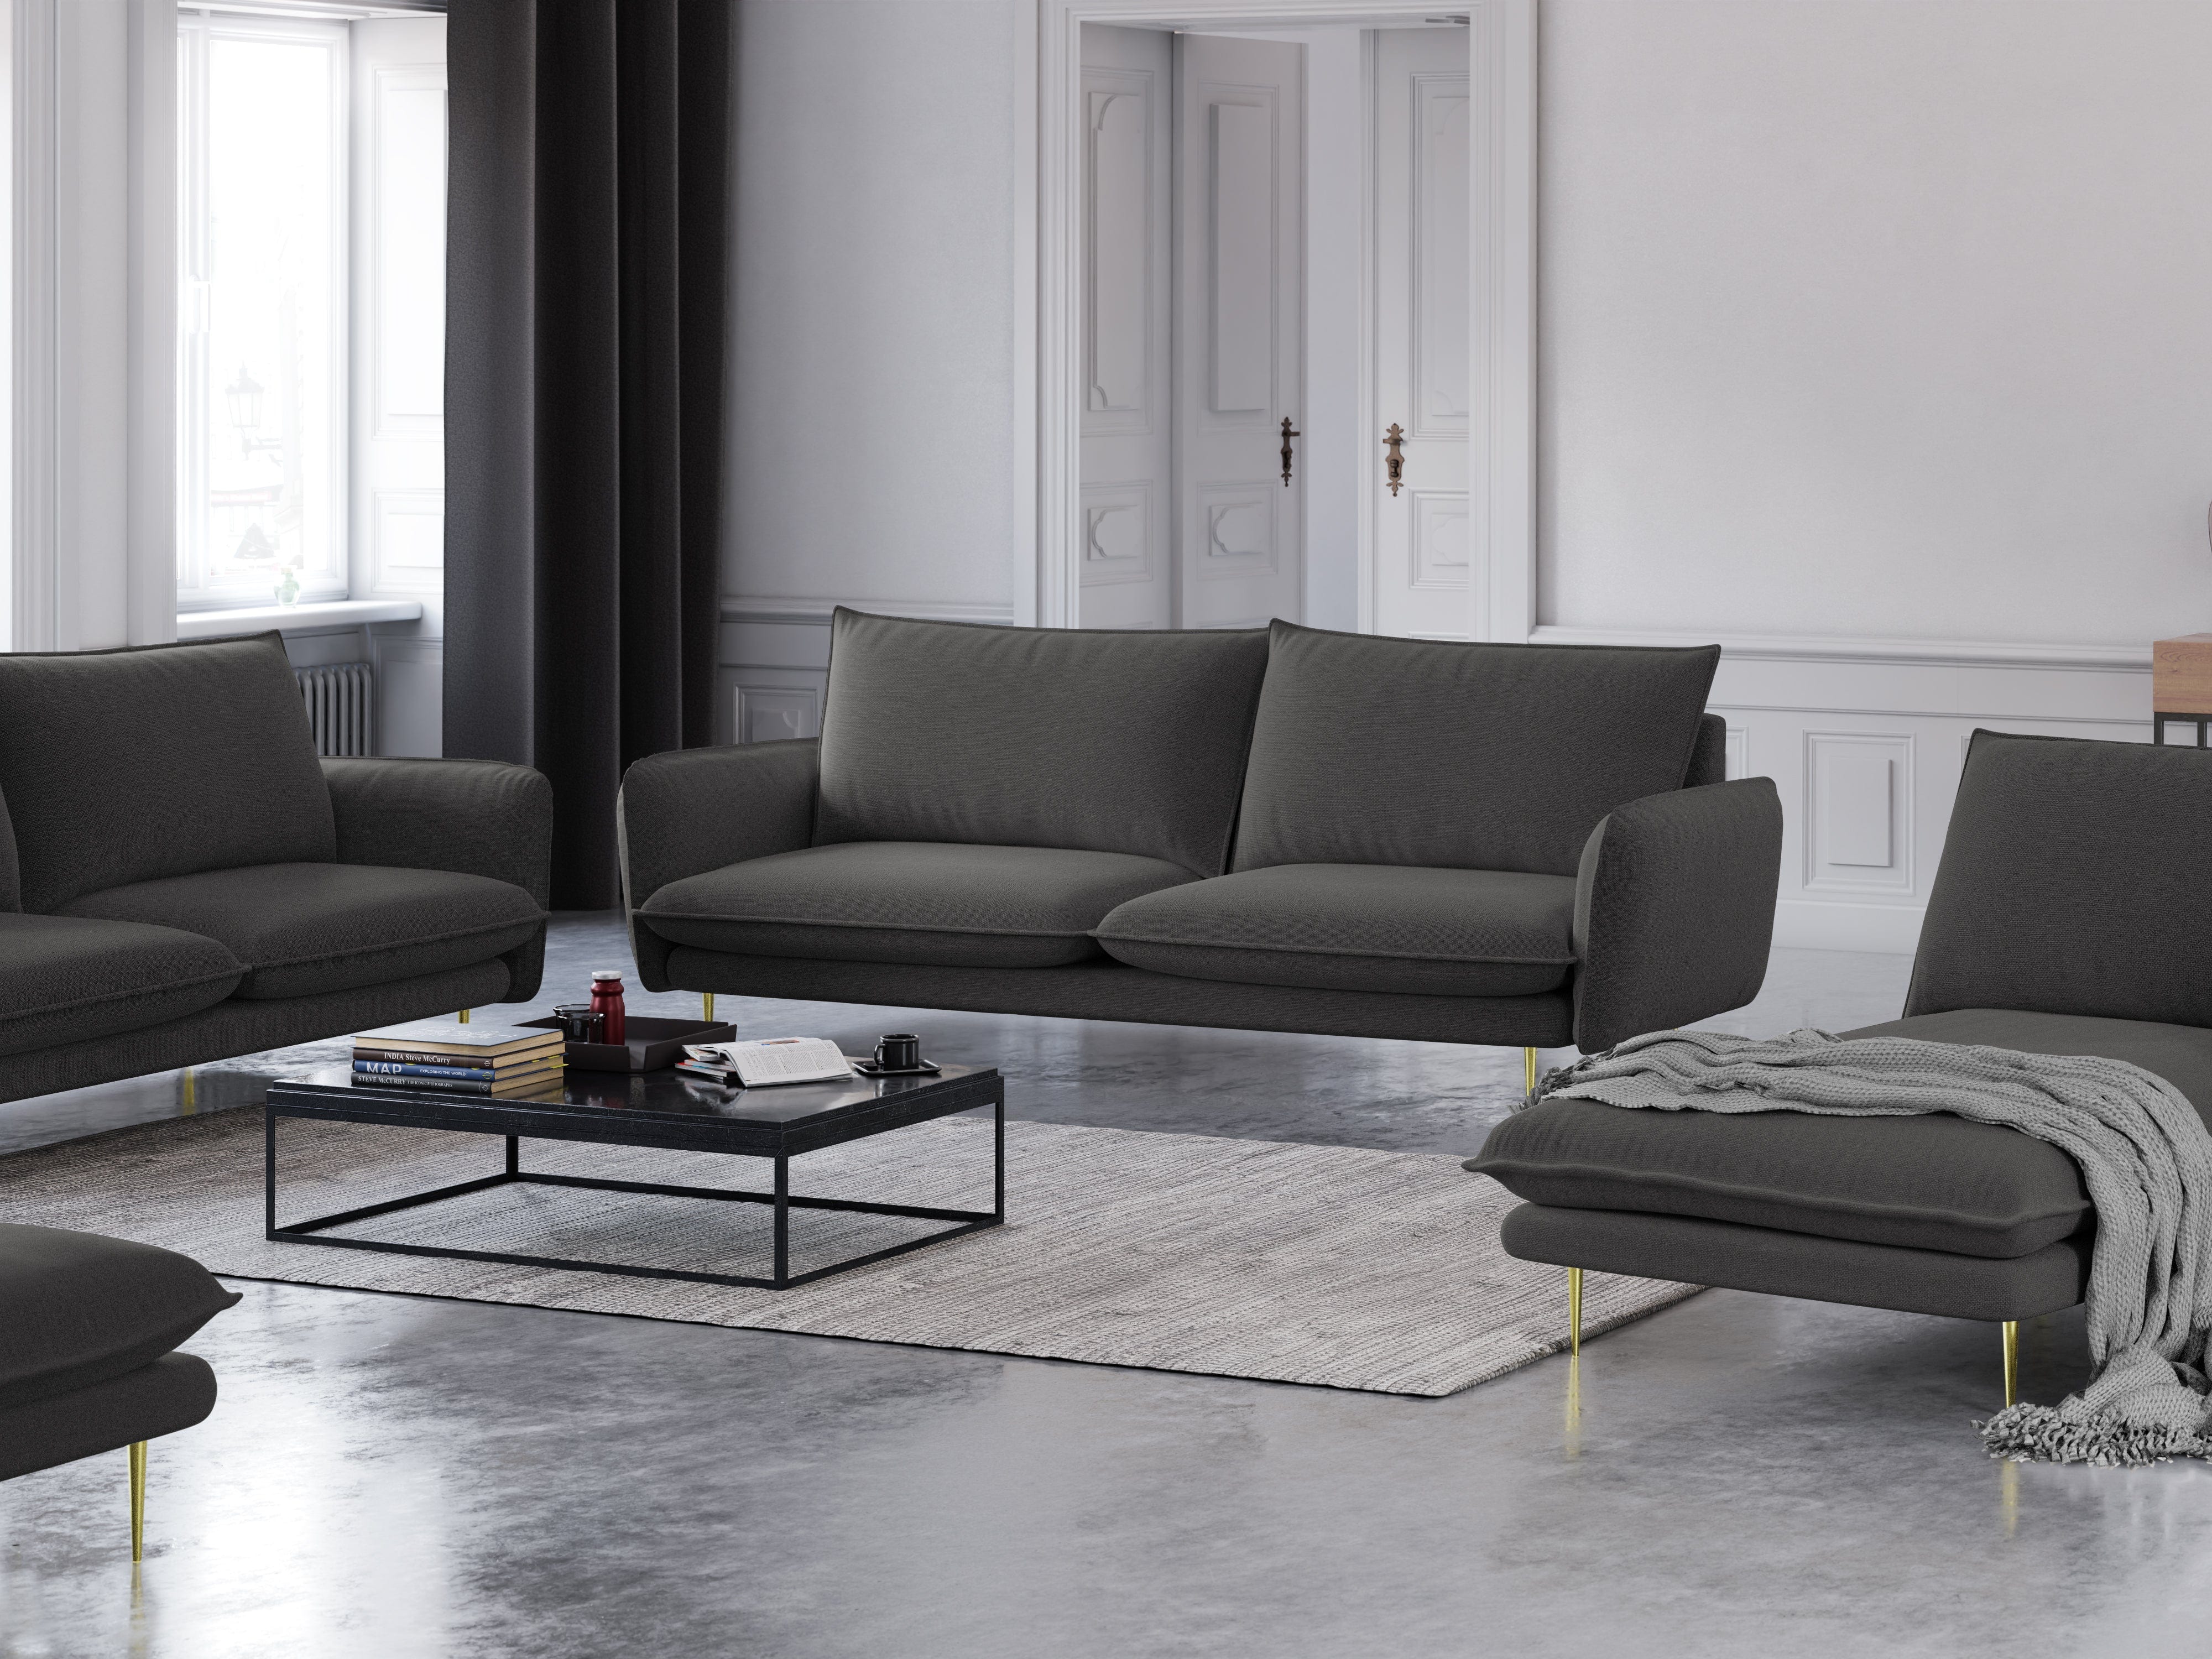 4-seater sofa VIENNA dark grey with gold base